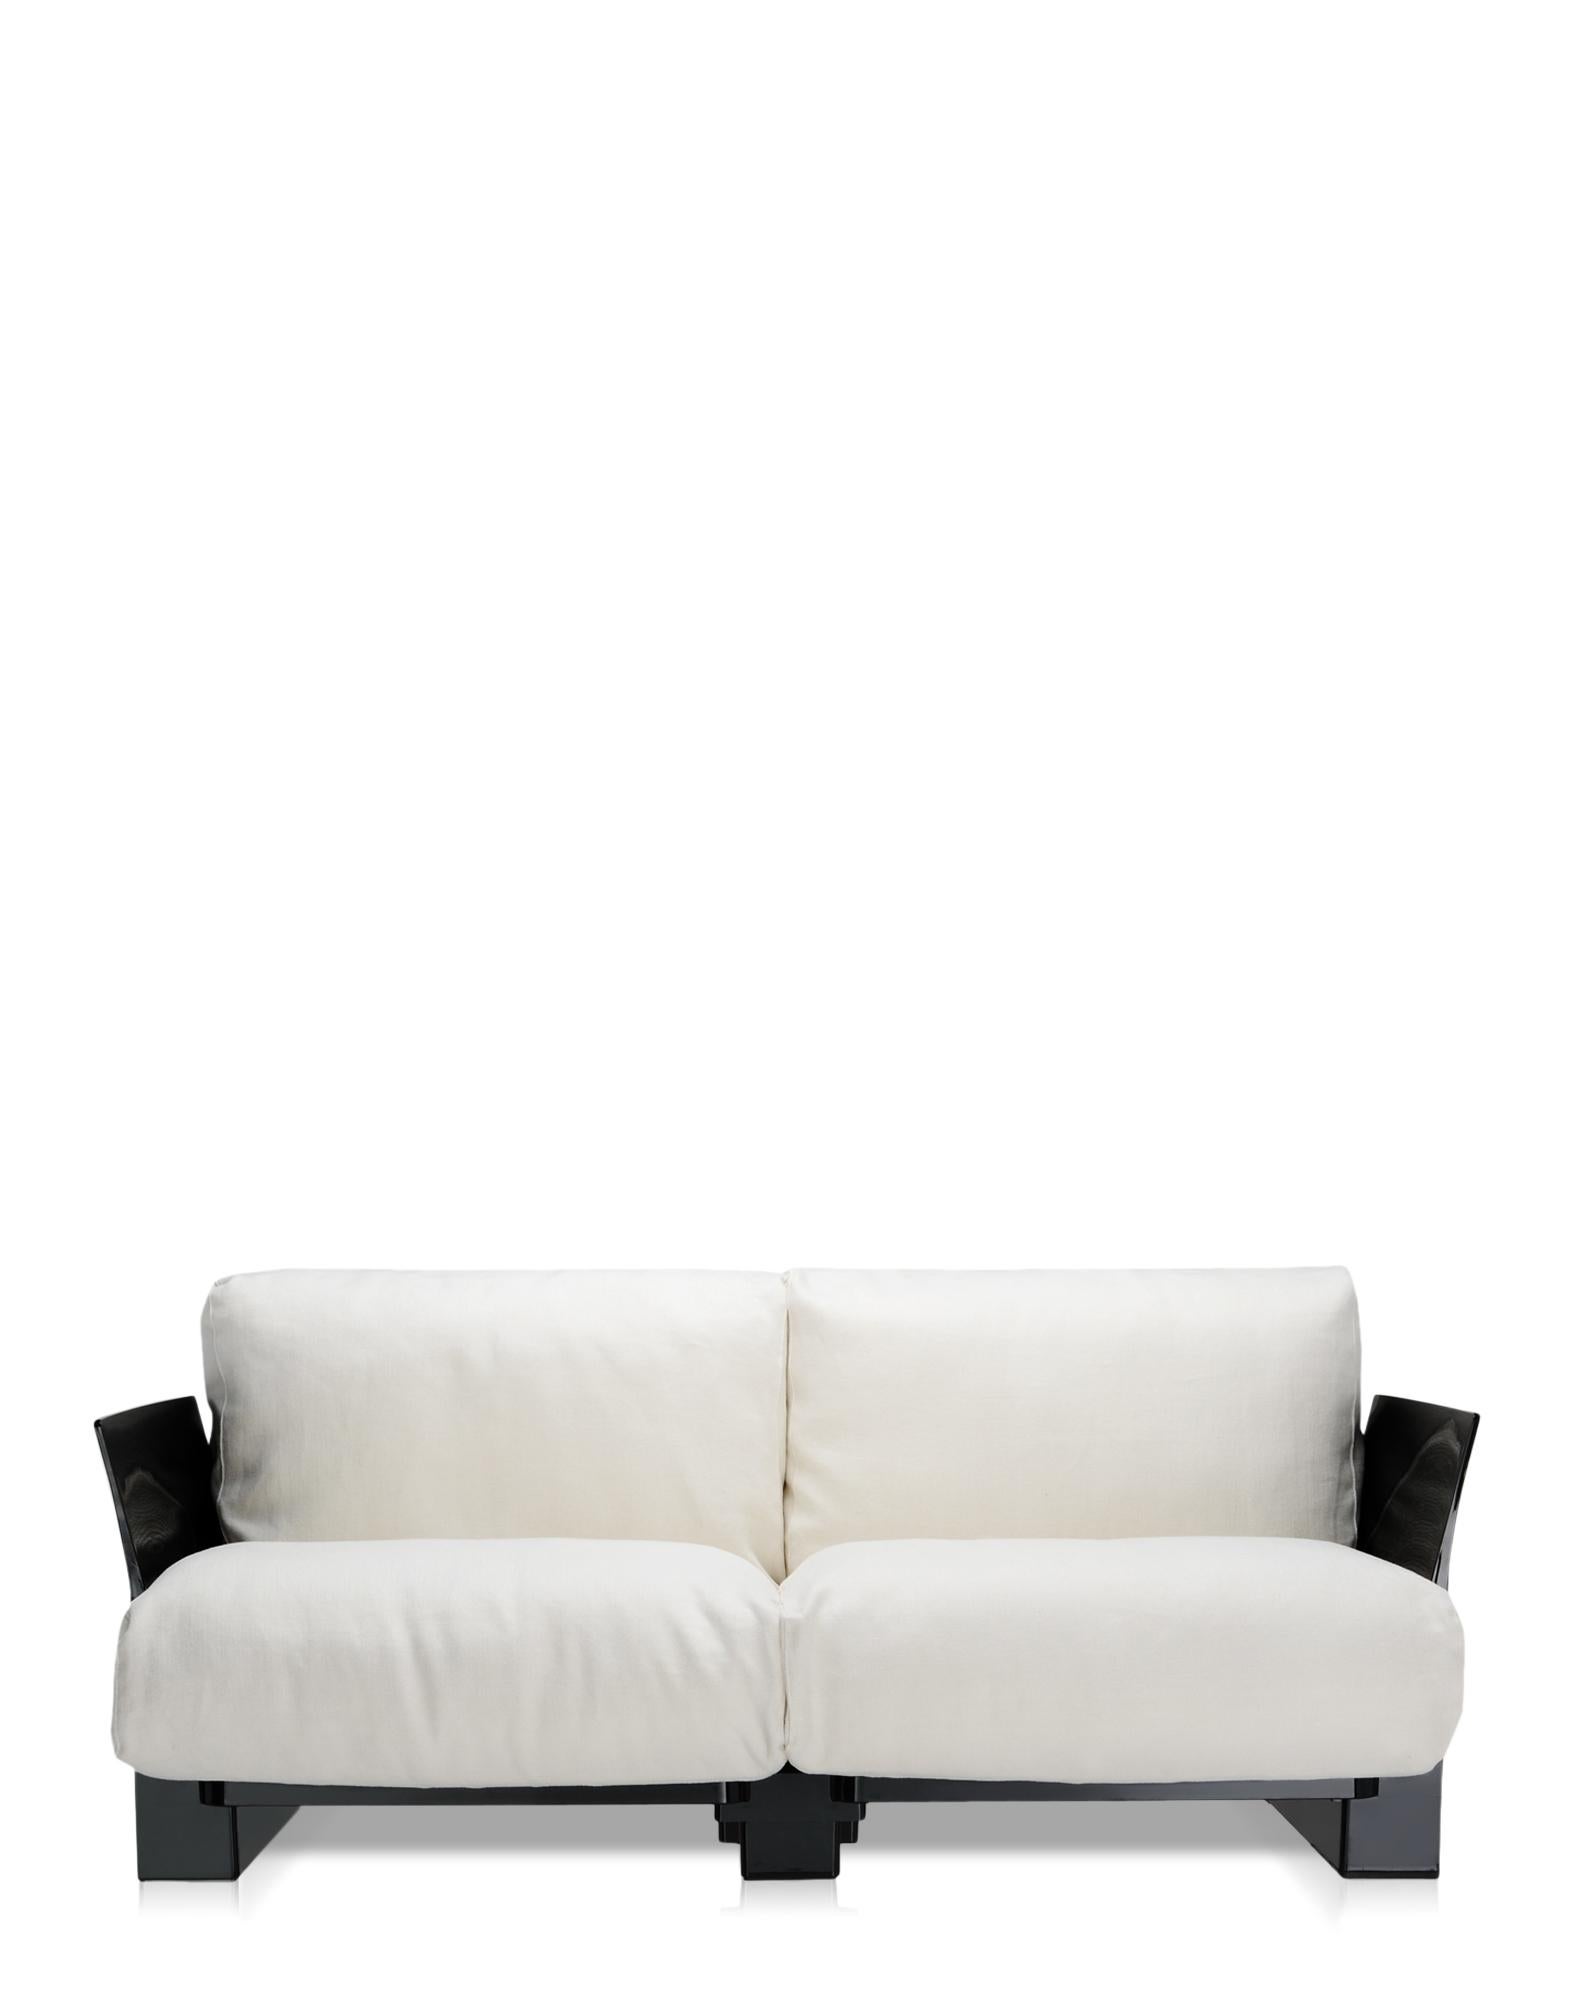 Fabric Kartell Pop Outdoor Sofa in Sunbrella White by Piero Lissoni For Sale